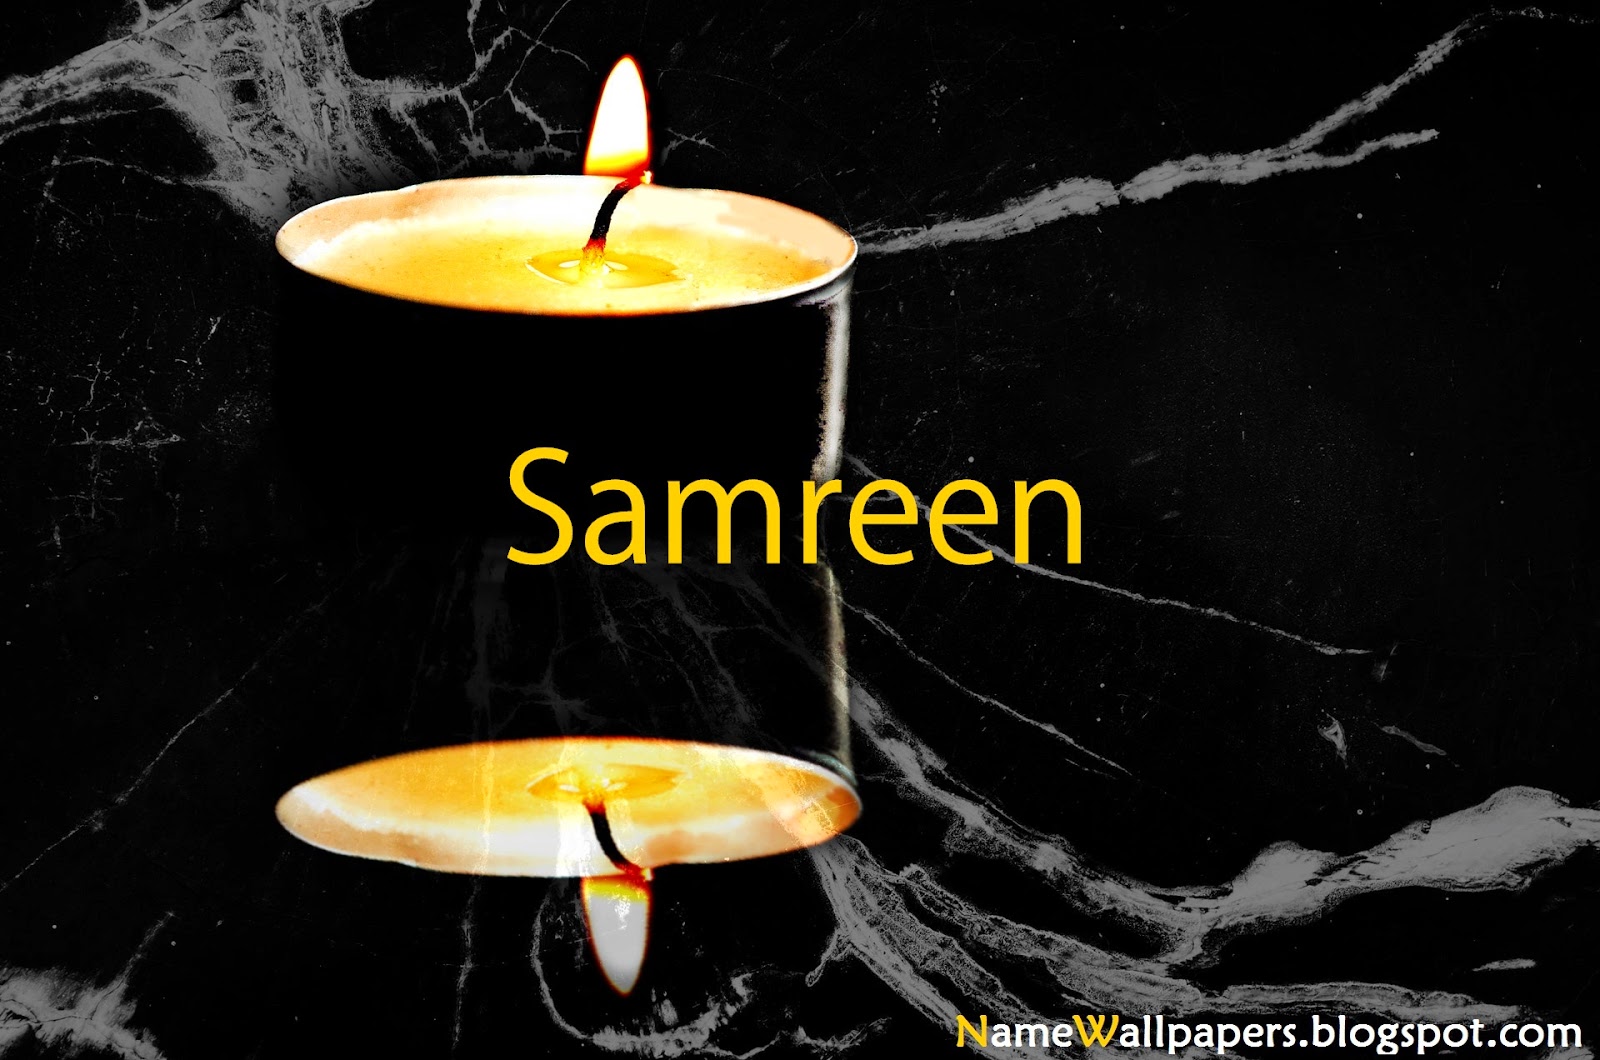 samreen name wallpaper,candle,lighting,still life photography,yellow,flame